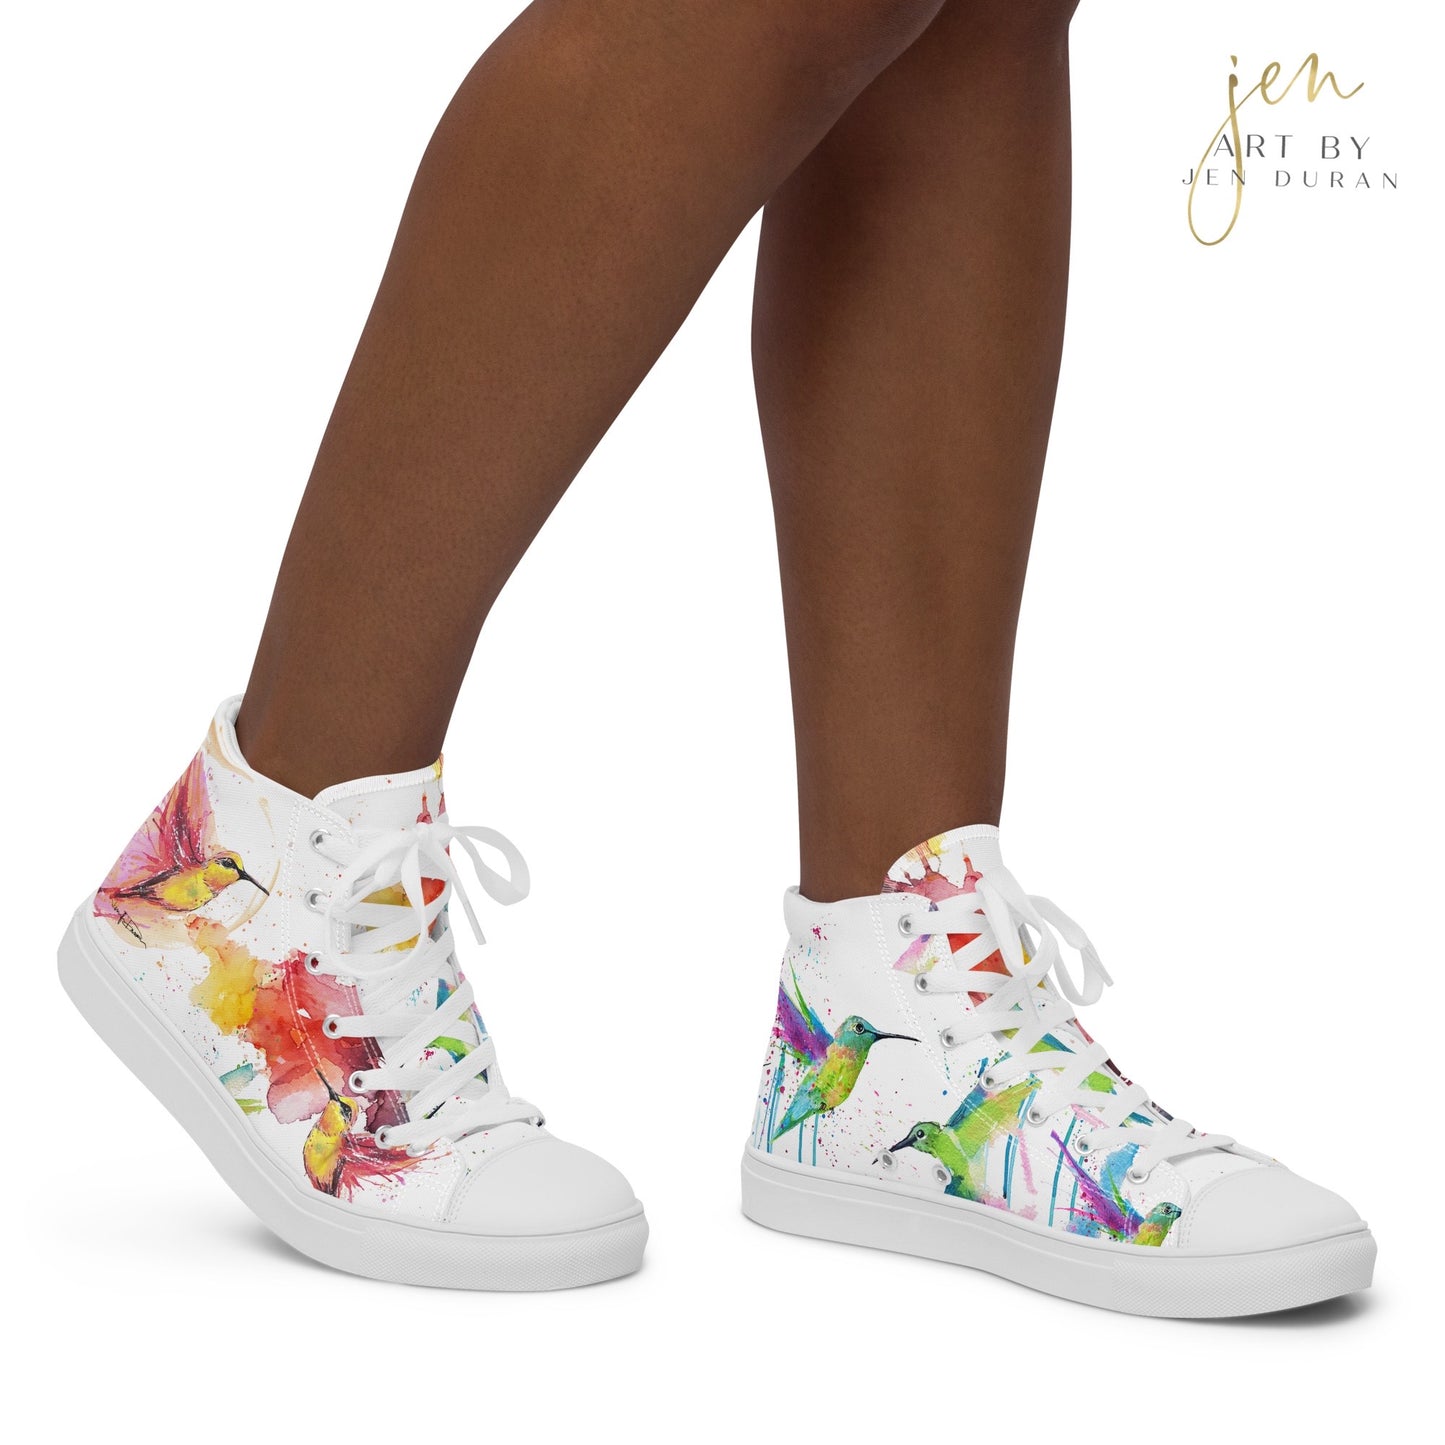 Women’s High Top Canvas Shoes | High Top Sneakers | Watercolor Hummingbird Design